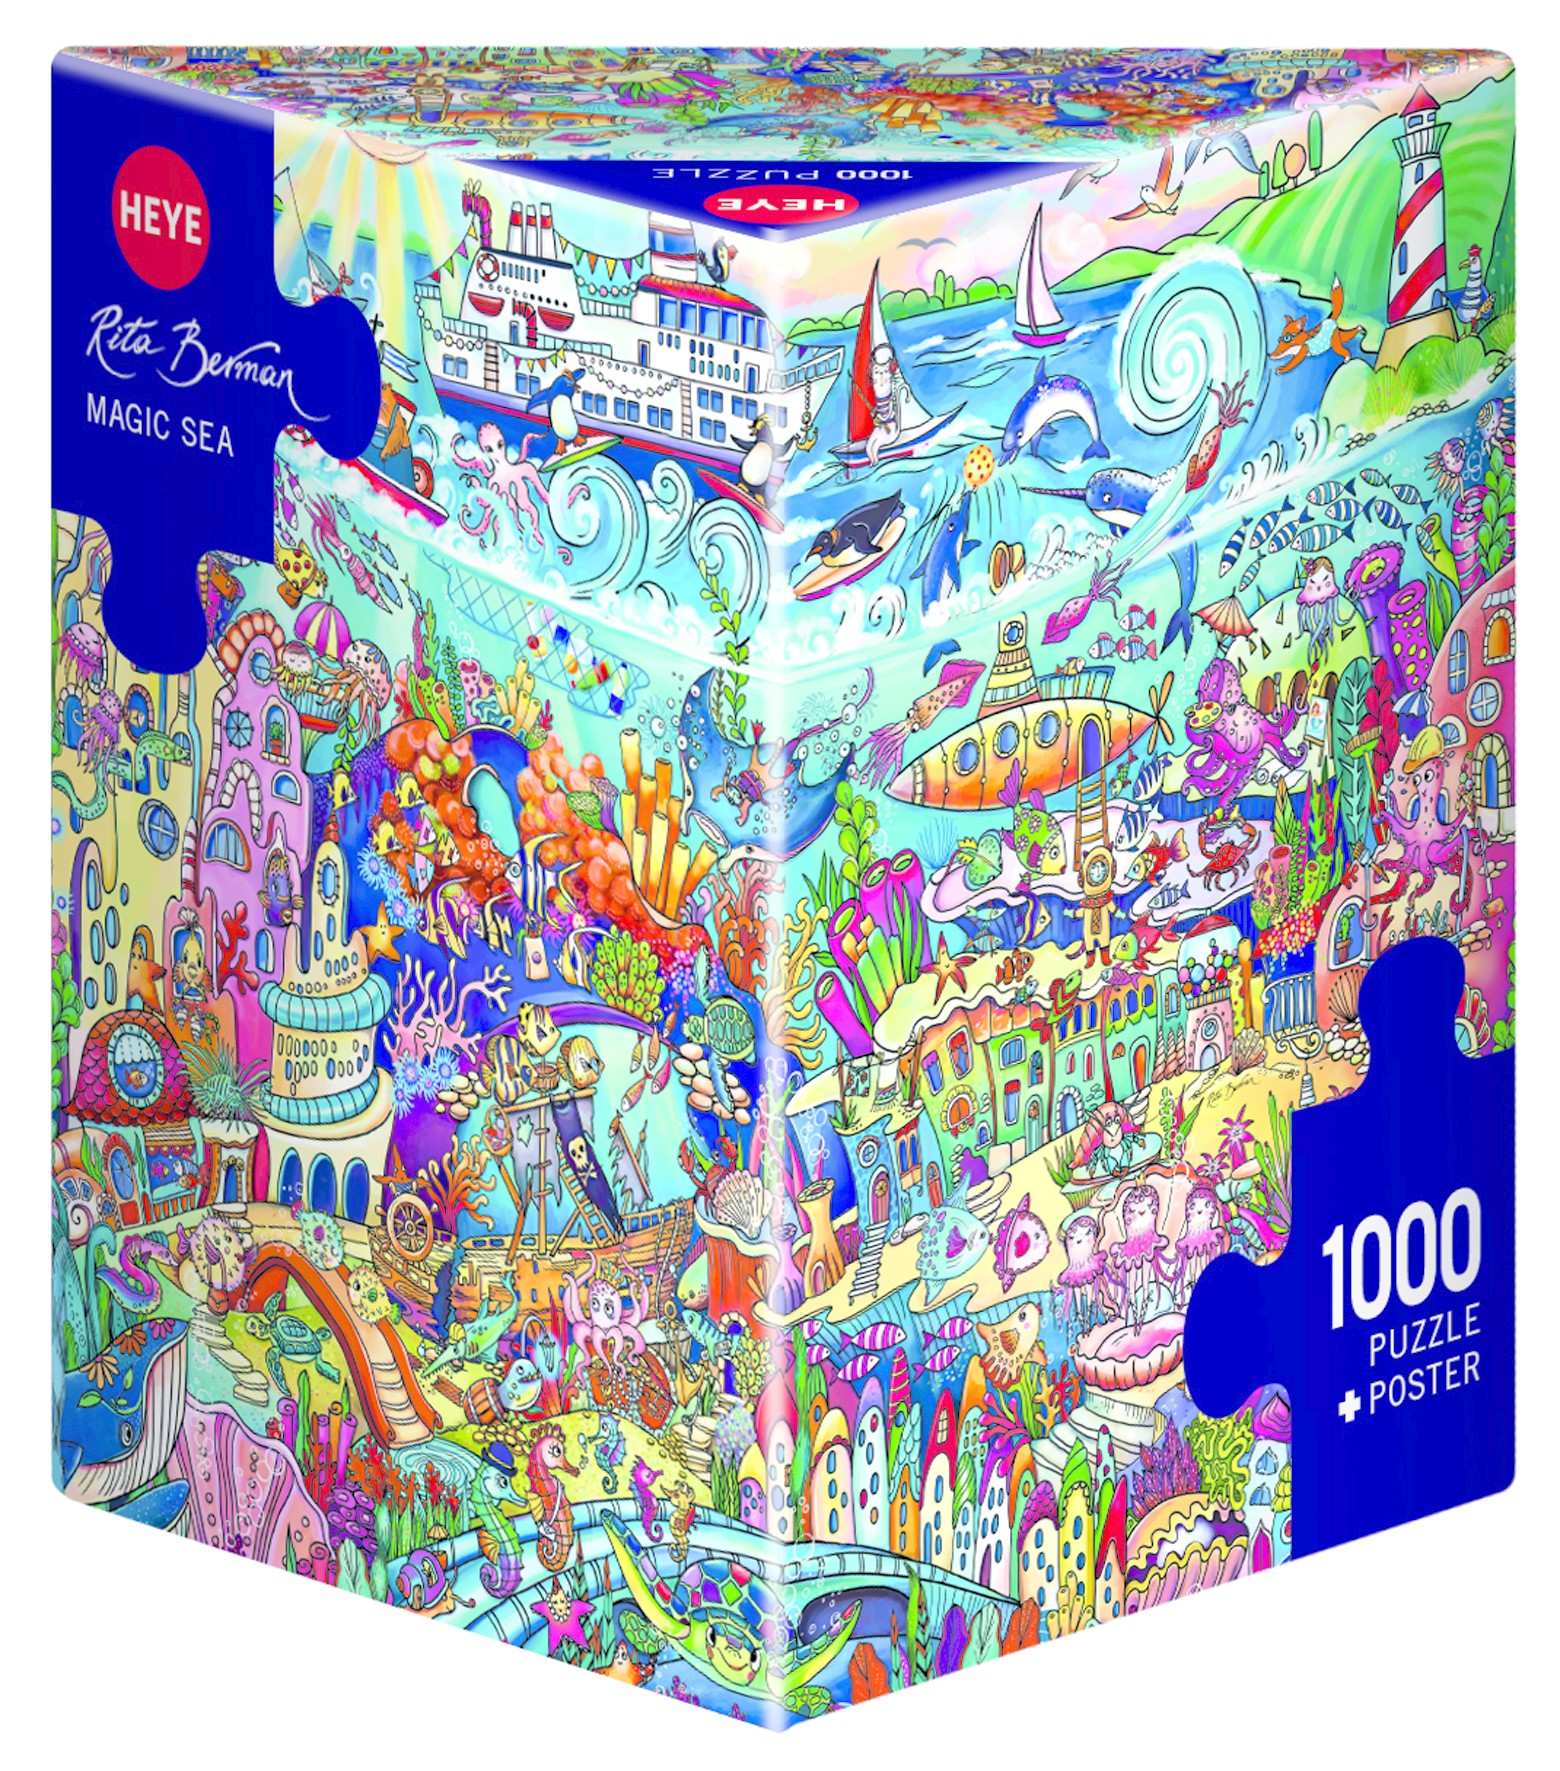 Puzzle Rita Berman - Magic Sea Heye-29839 1000 pièces Puzzles - Bateaux